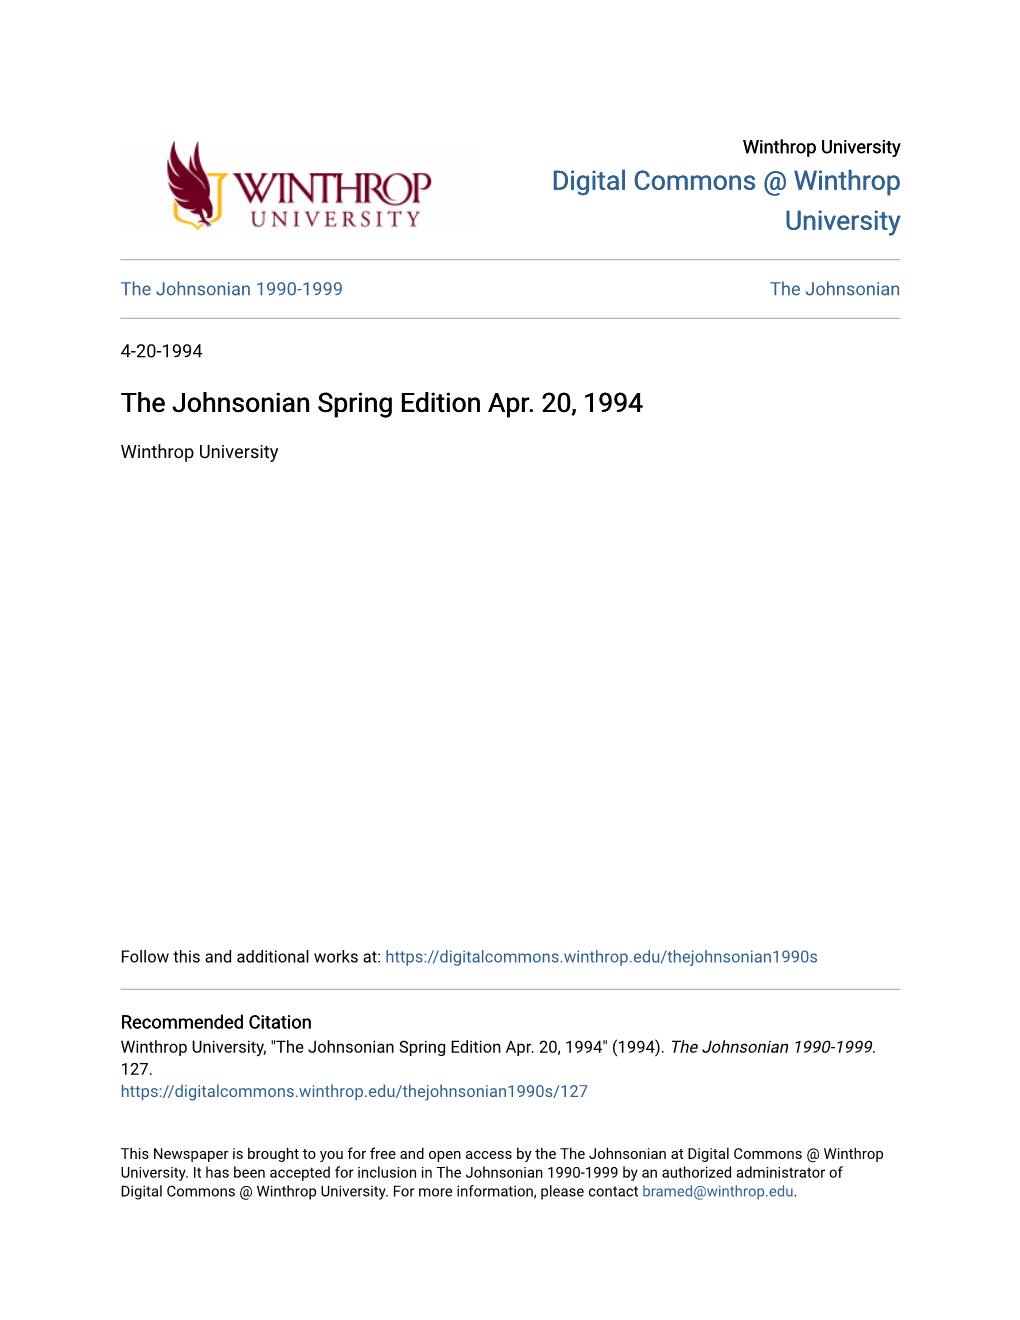 The Johnsonian Spring Edition Apr. 20, 1994